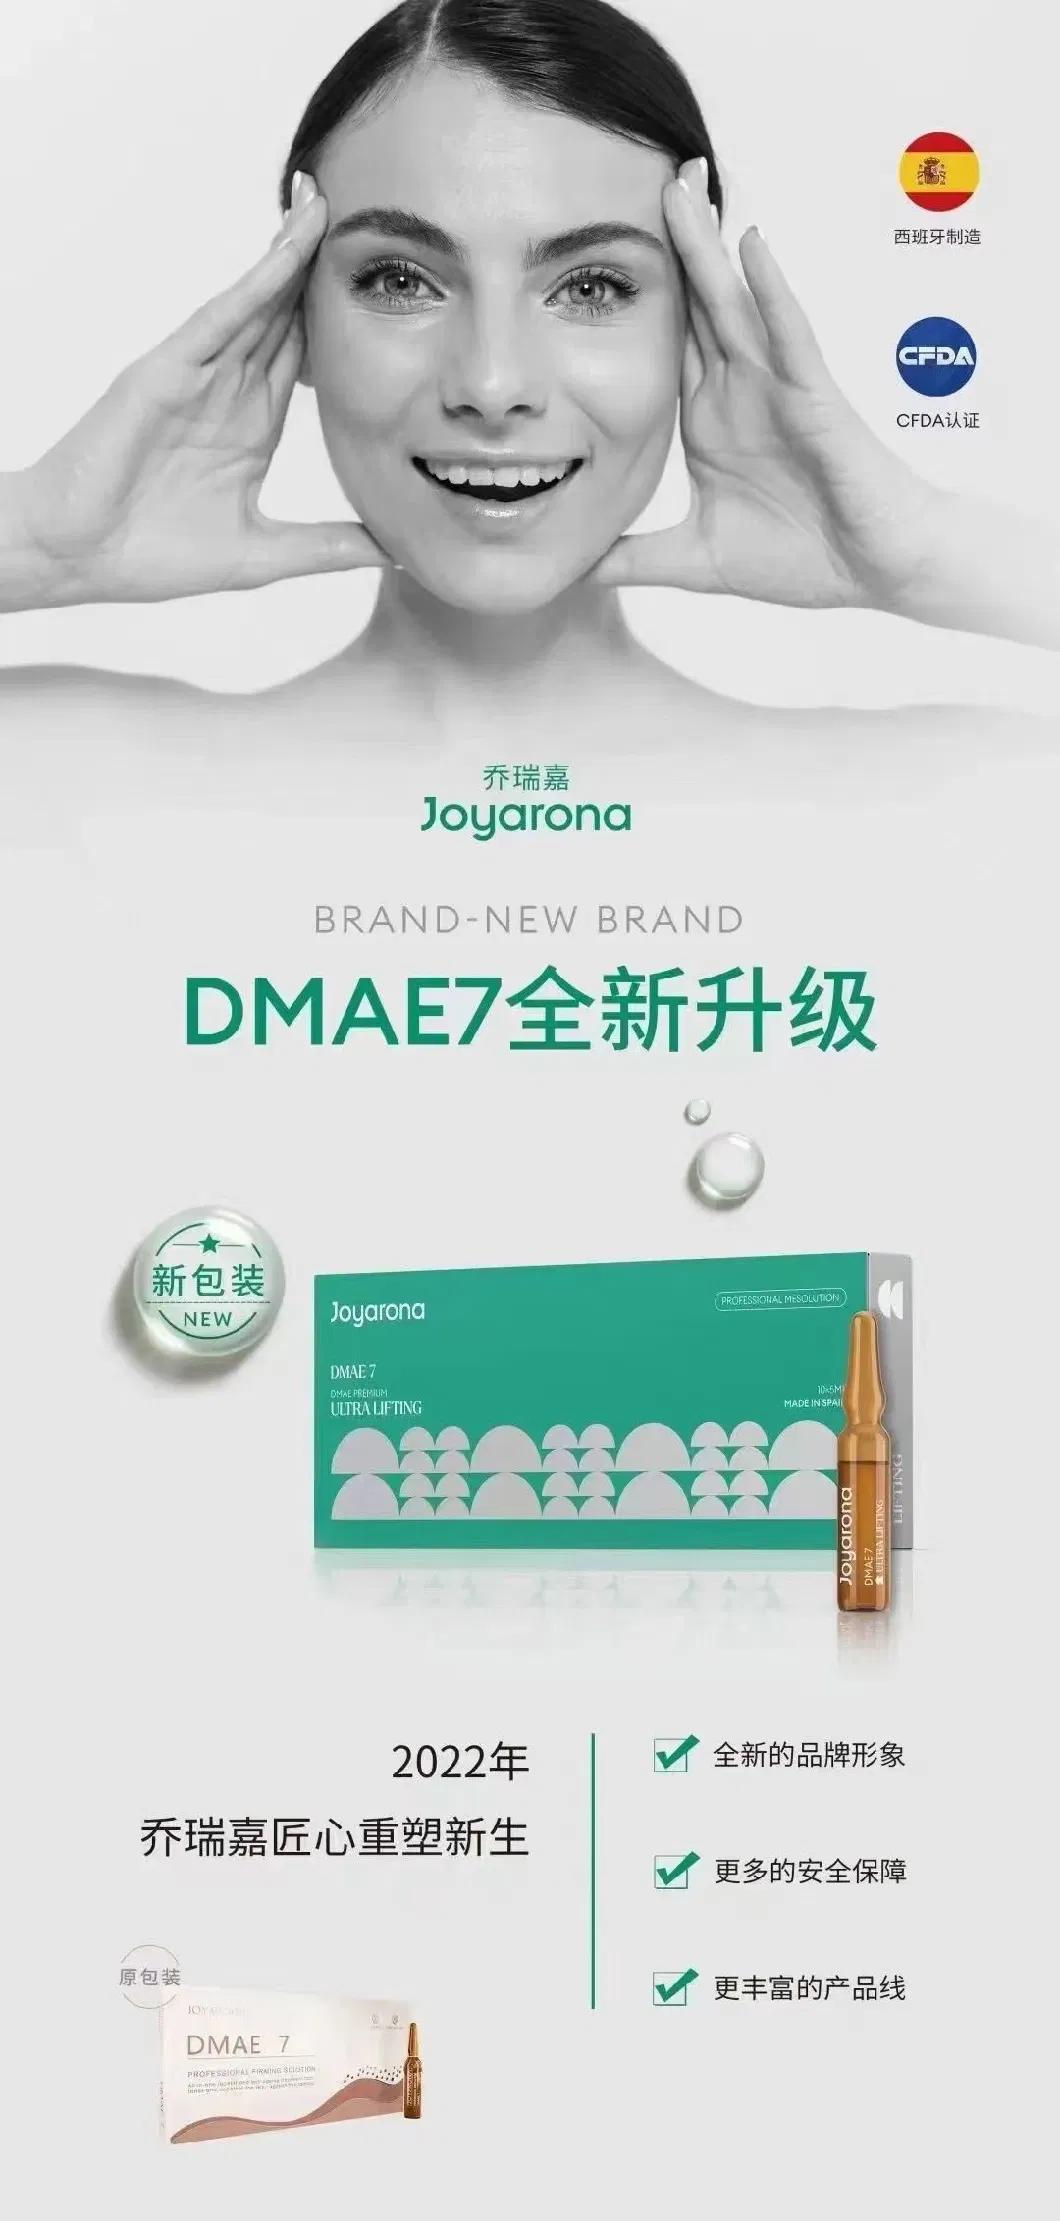 Spain Brand Liquid Face Lifting Injection Joyarona Dmae 7 Premium for Skin Tightening Anti Aging Profhilo Nucleofill Bellona Hyaluronic Acid Derma Heal